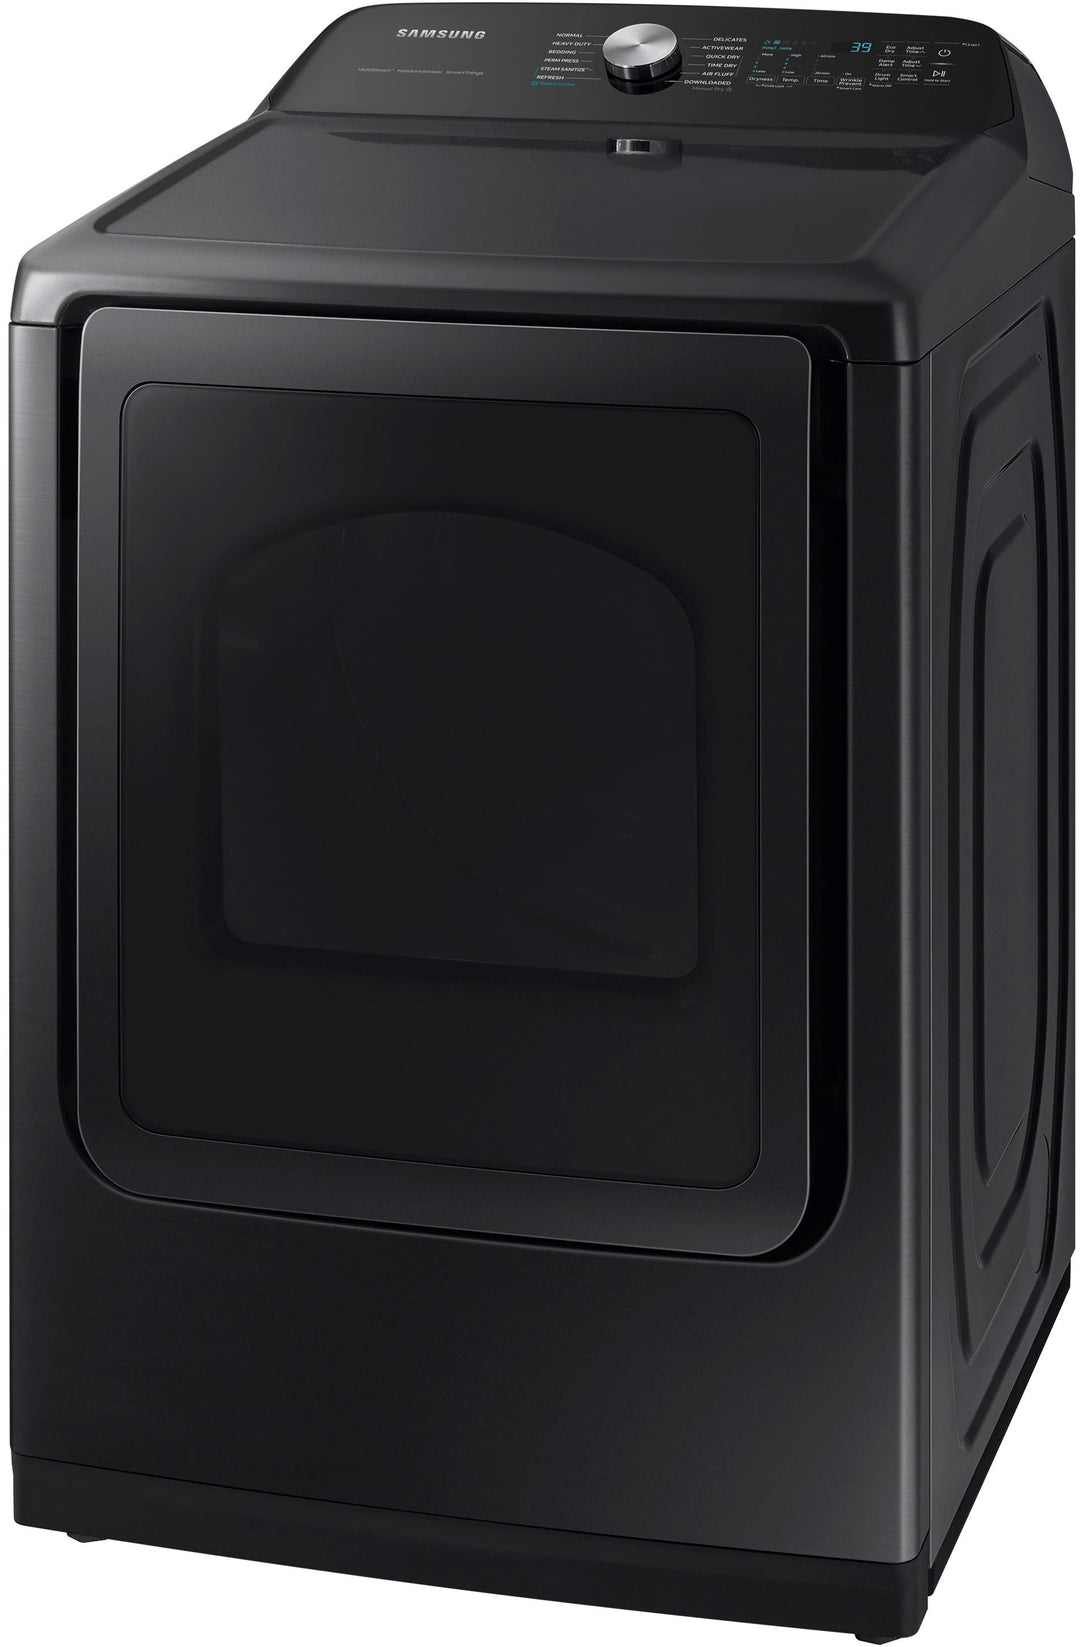 Samsung - 7.4 cu. ft. Smart Electric Dryer with Steam Sanitize+ - Brushed black_8